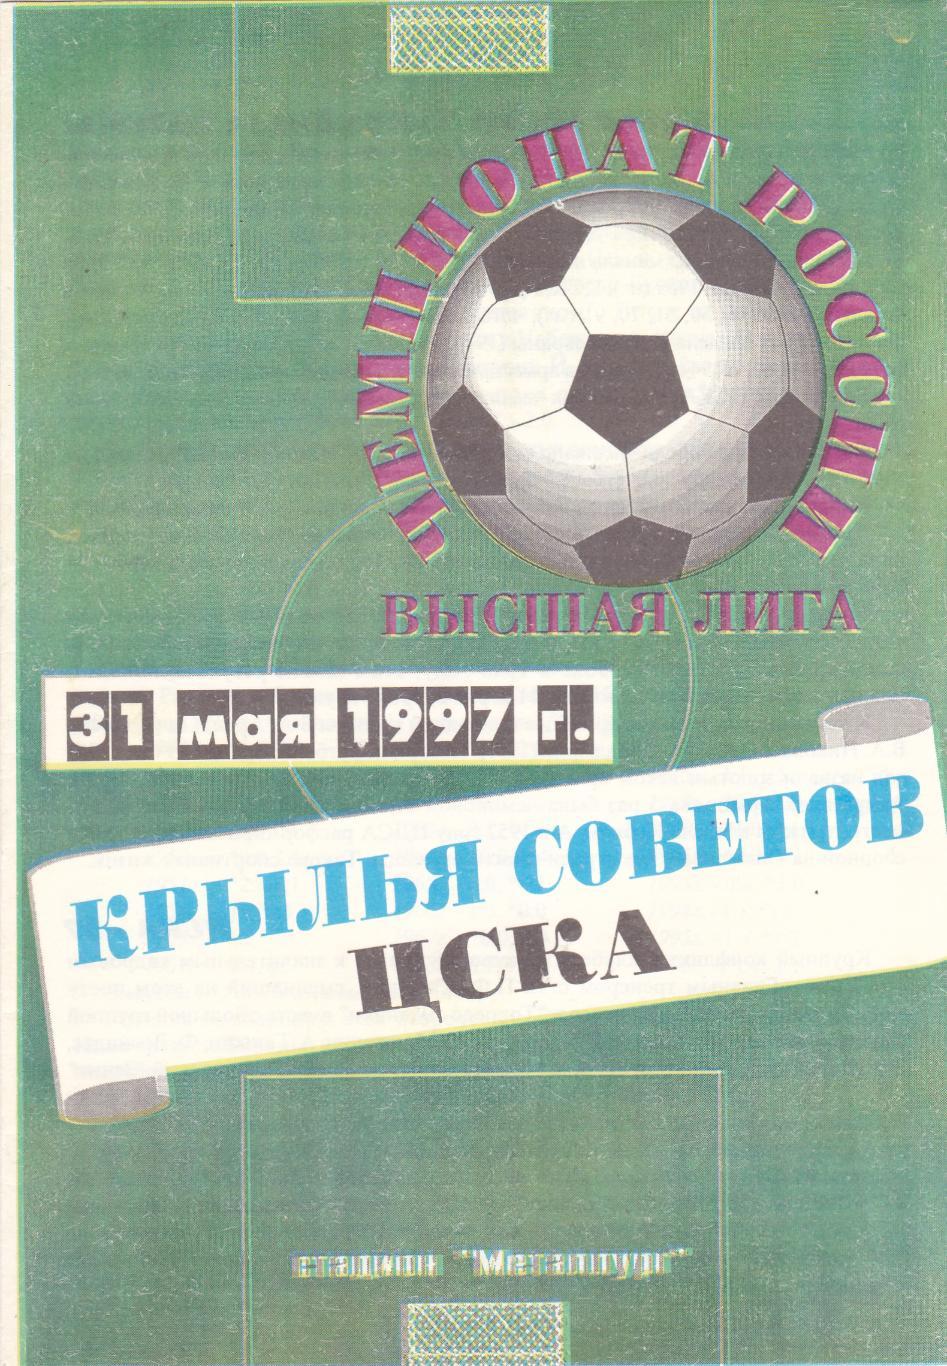 Крылья Советов (Самара) - ЦСКА (Москва) 31.05.1997